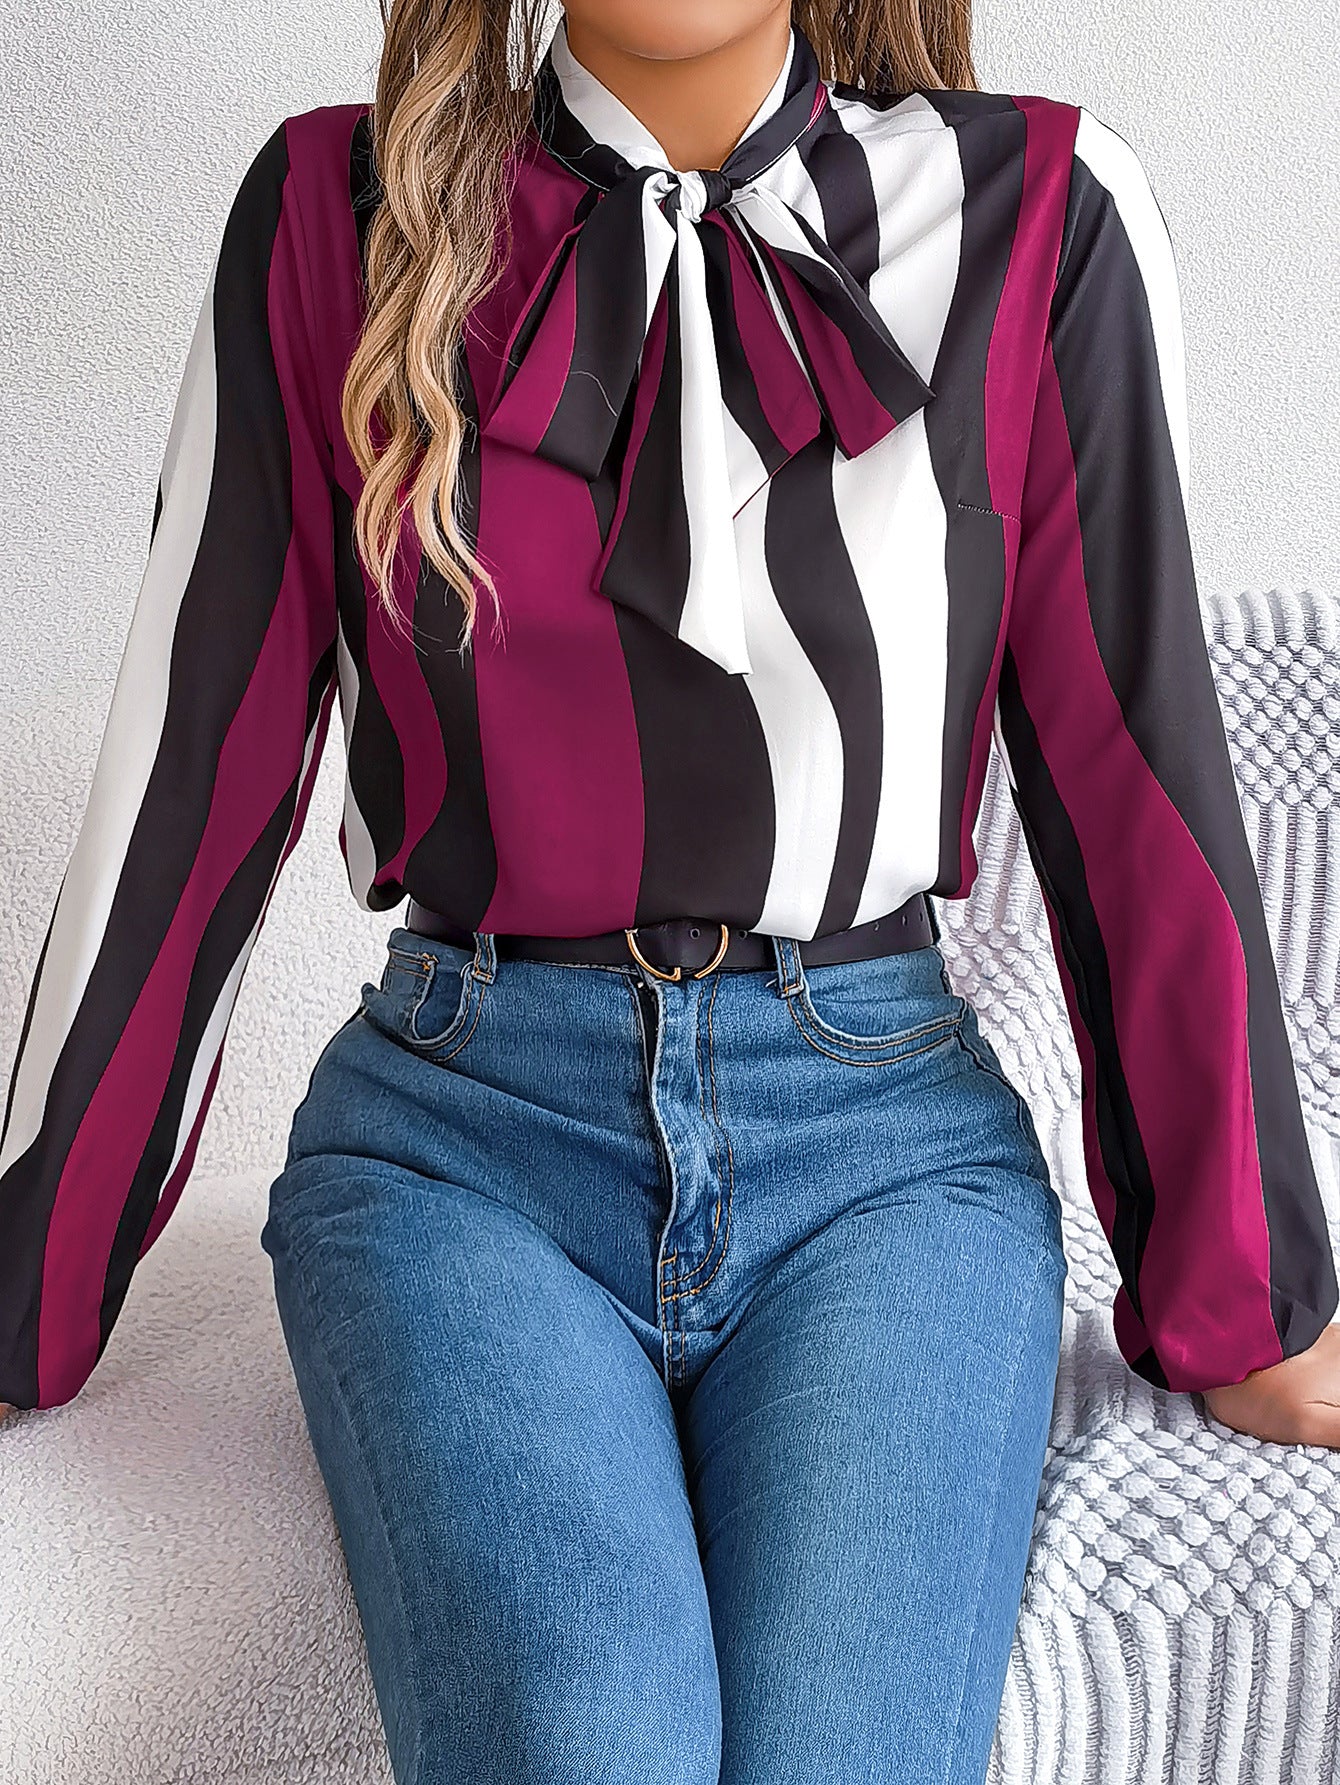 FZ Women's Elegant Contrast Color Striped Lace up Work Shirt Top